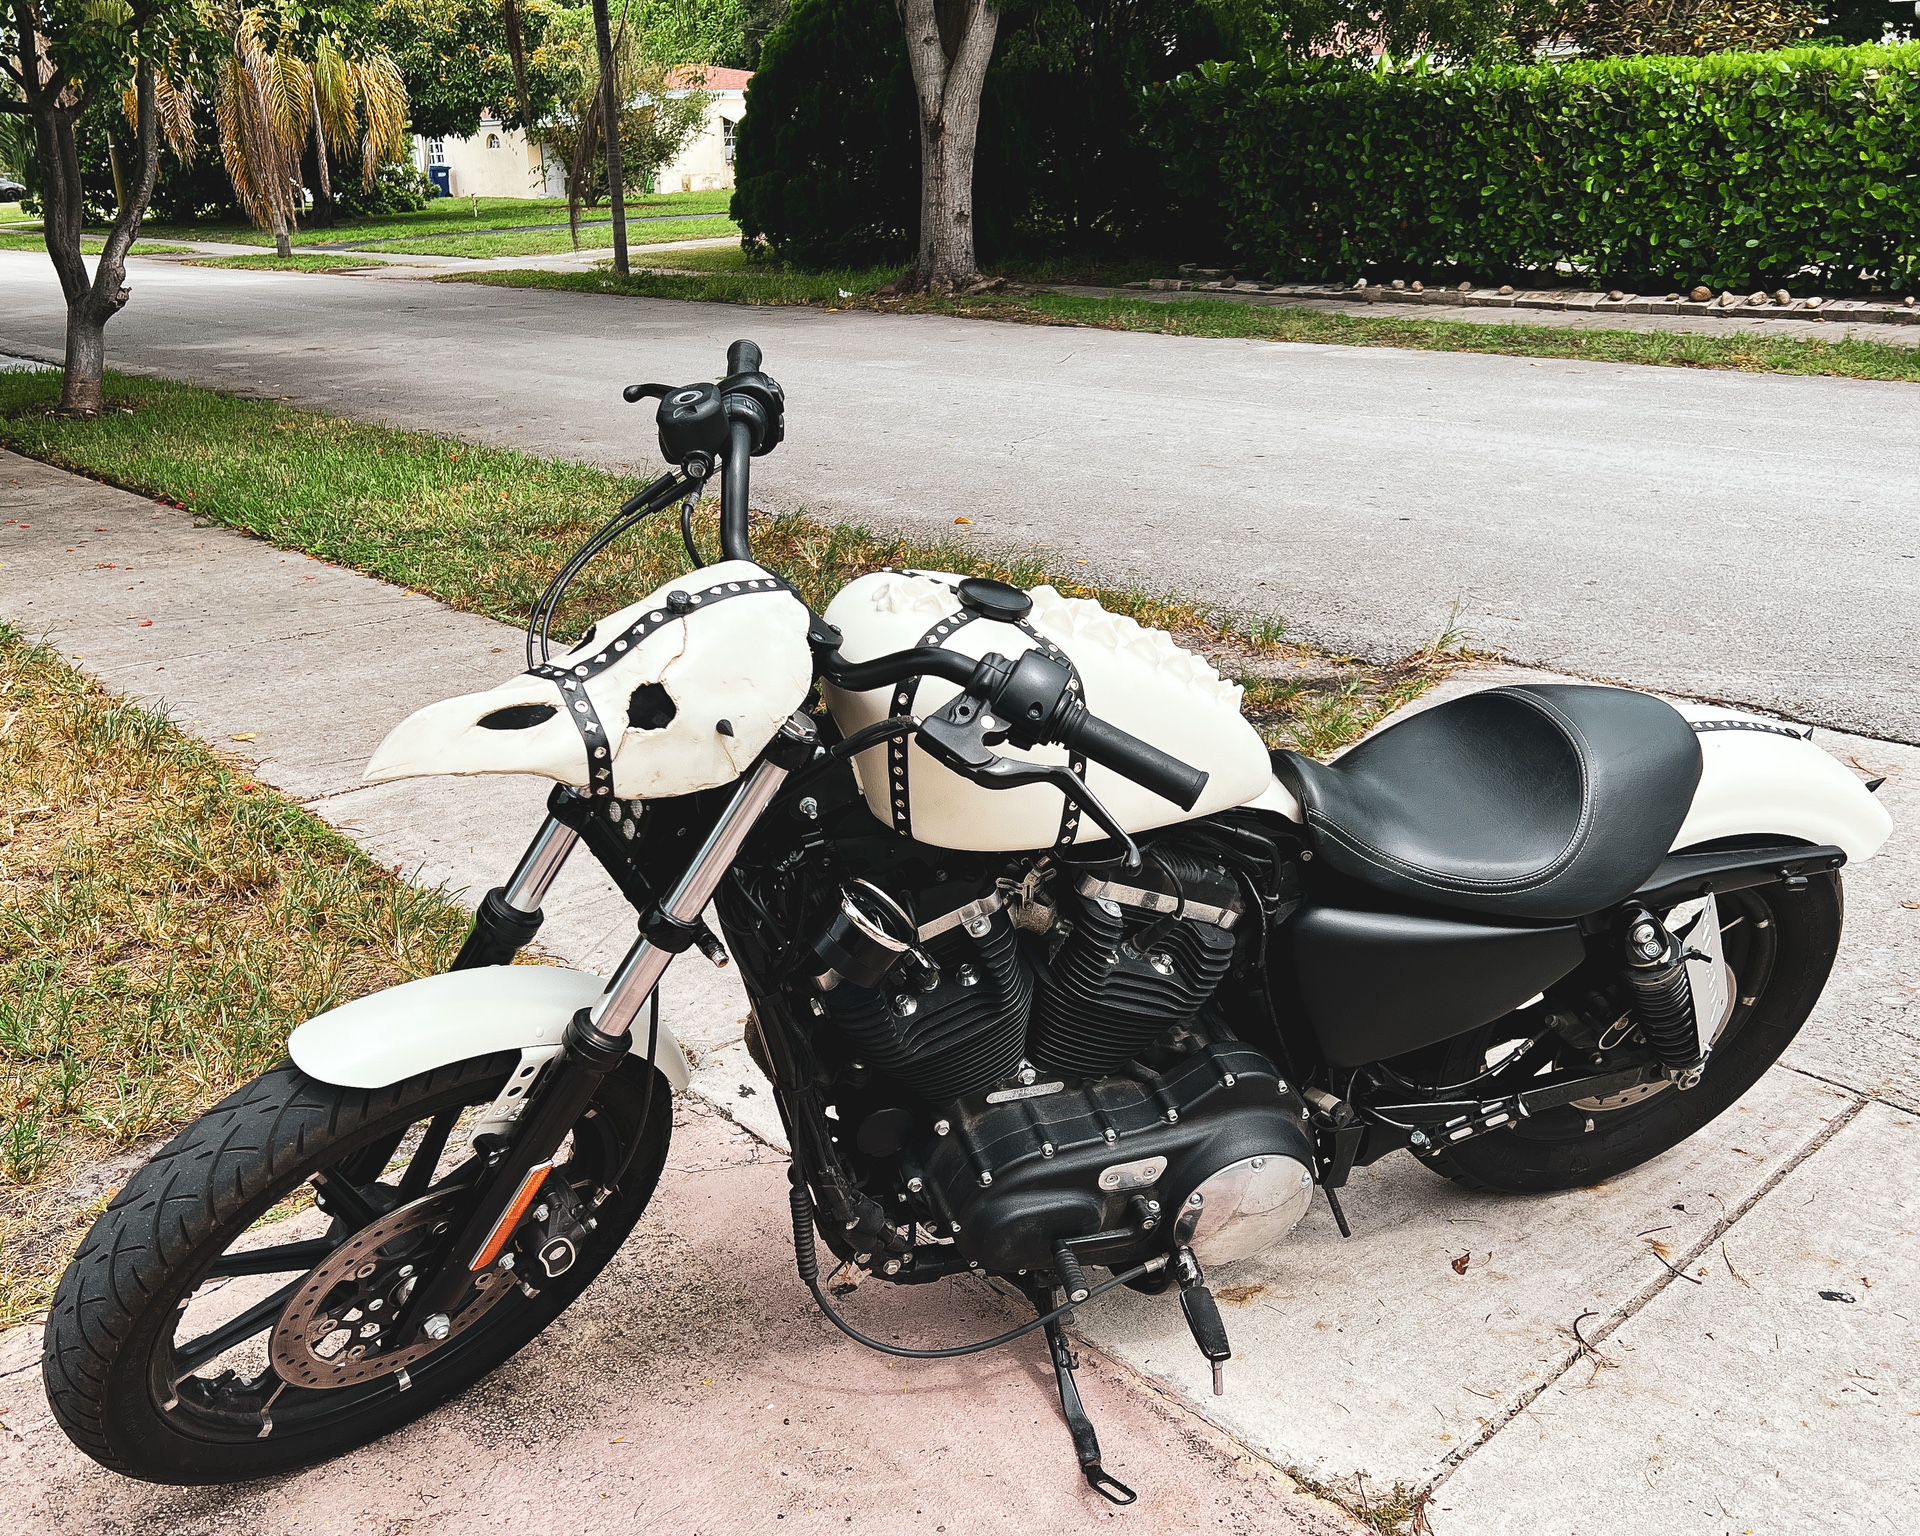 2018 Harley Davidson Iron 883